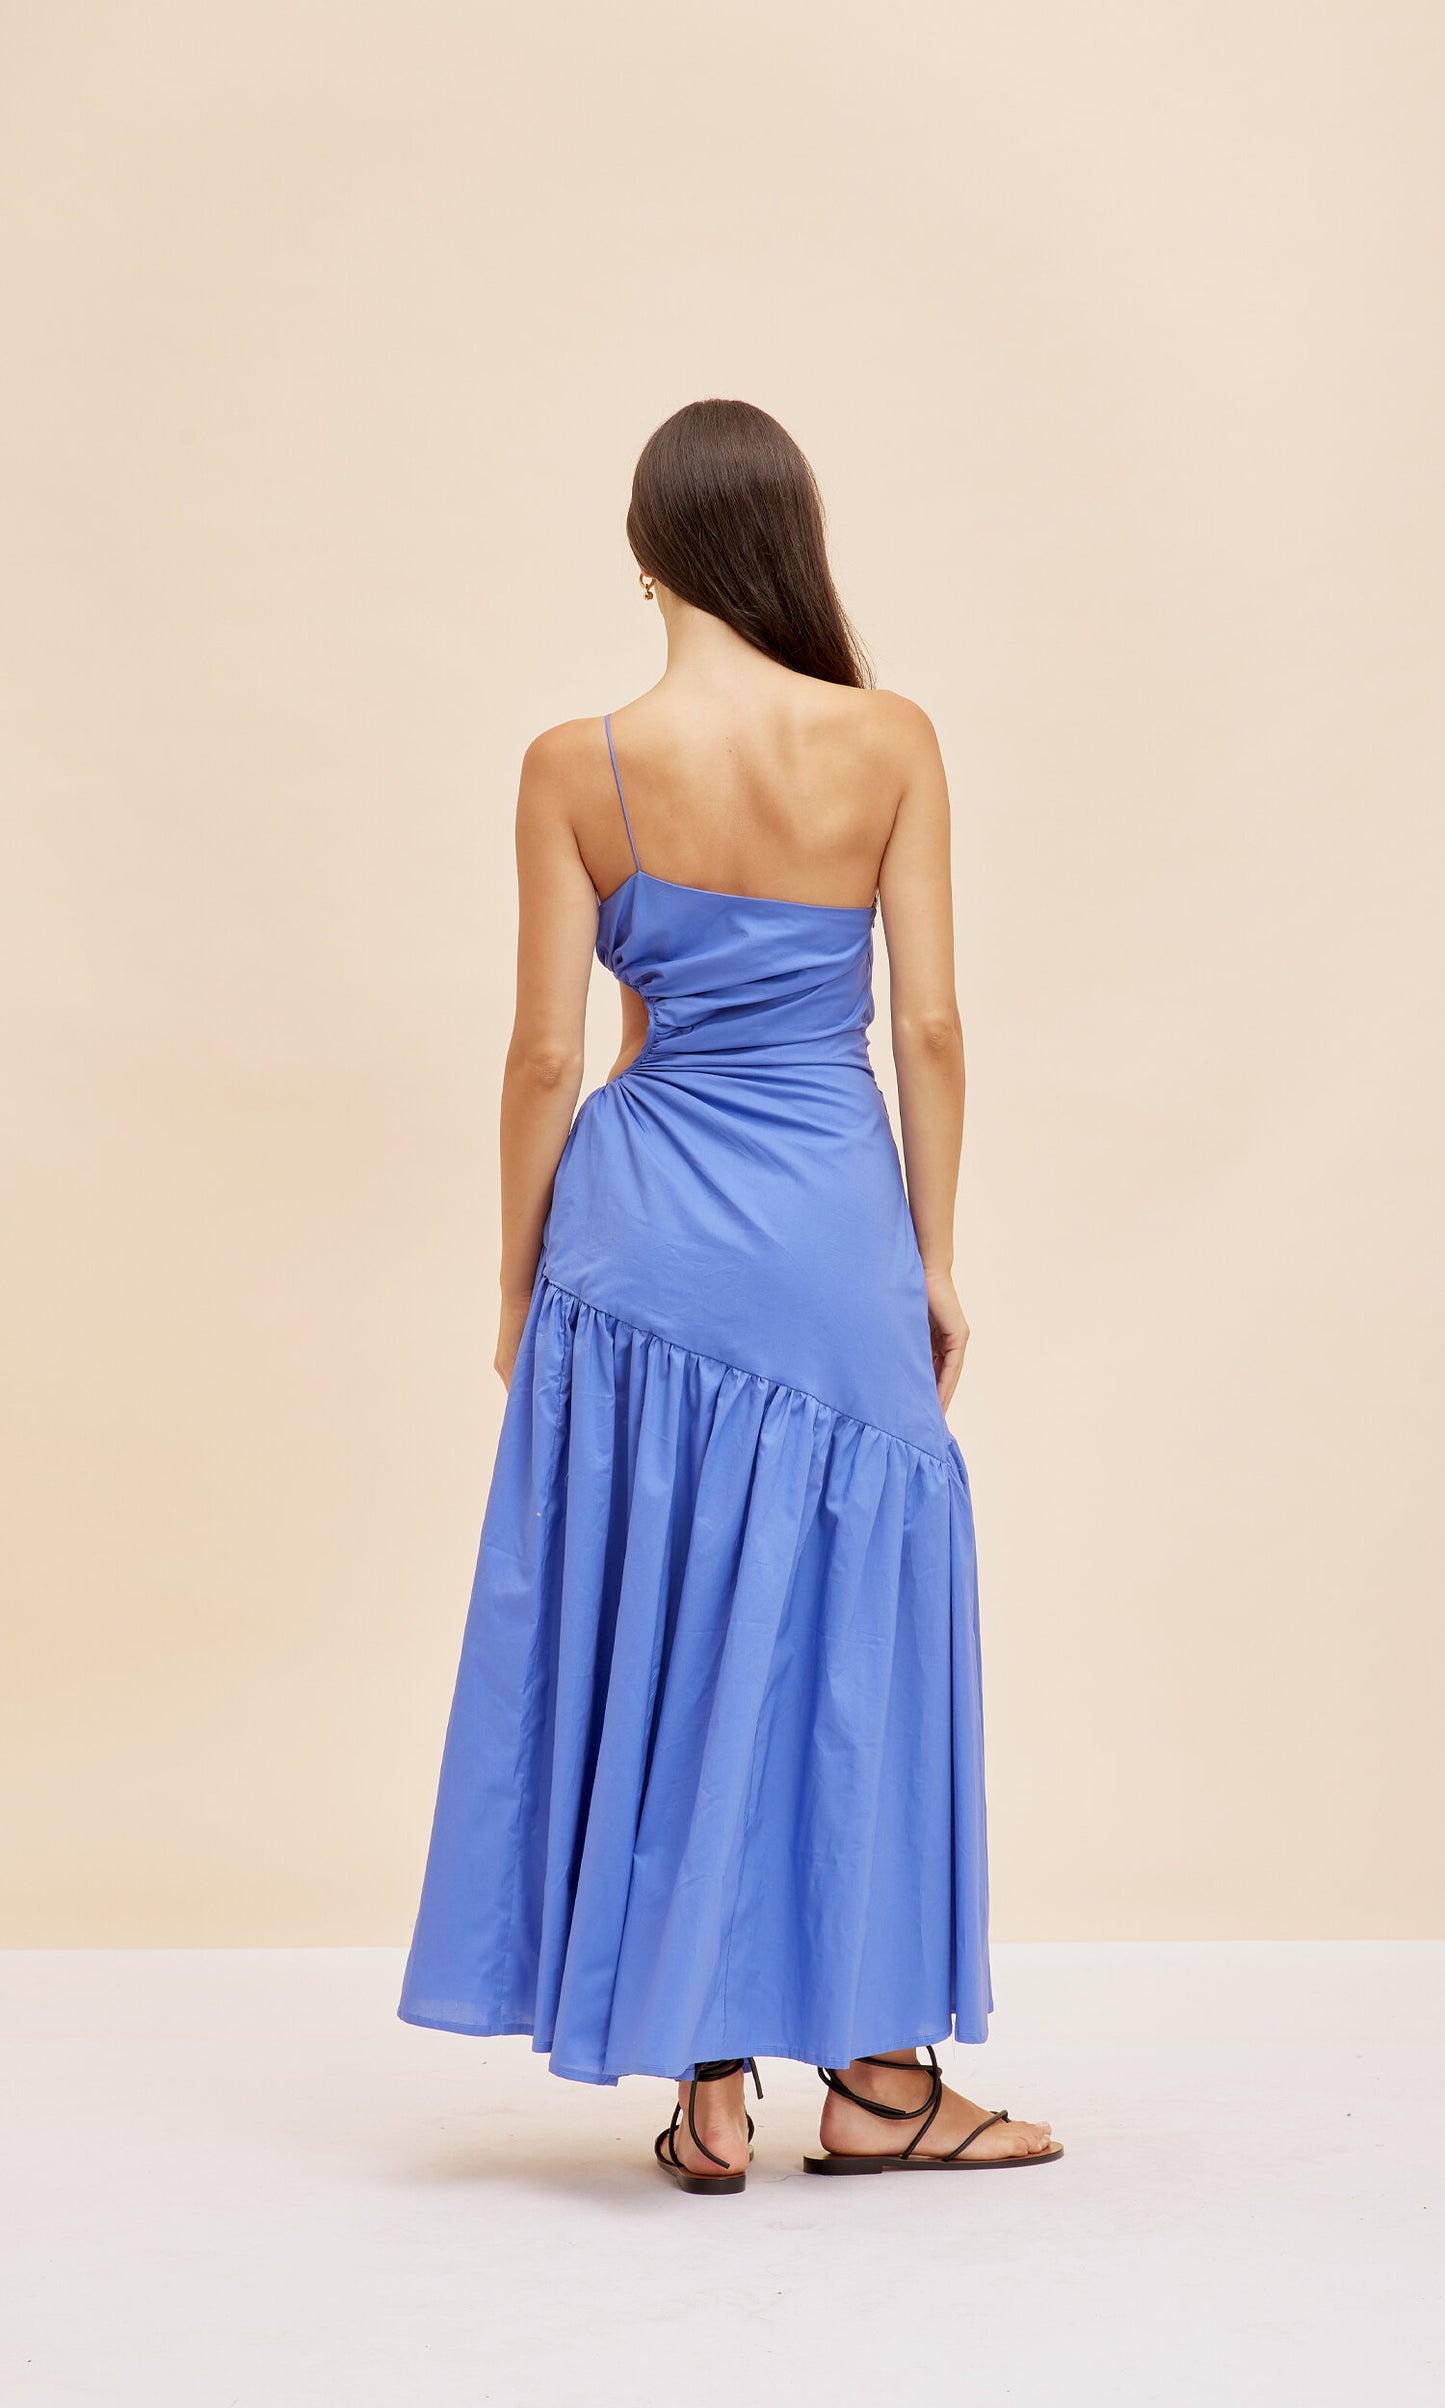 Bettina Cut-Out Dress in Baja Blue